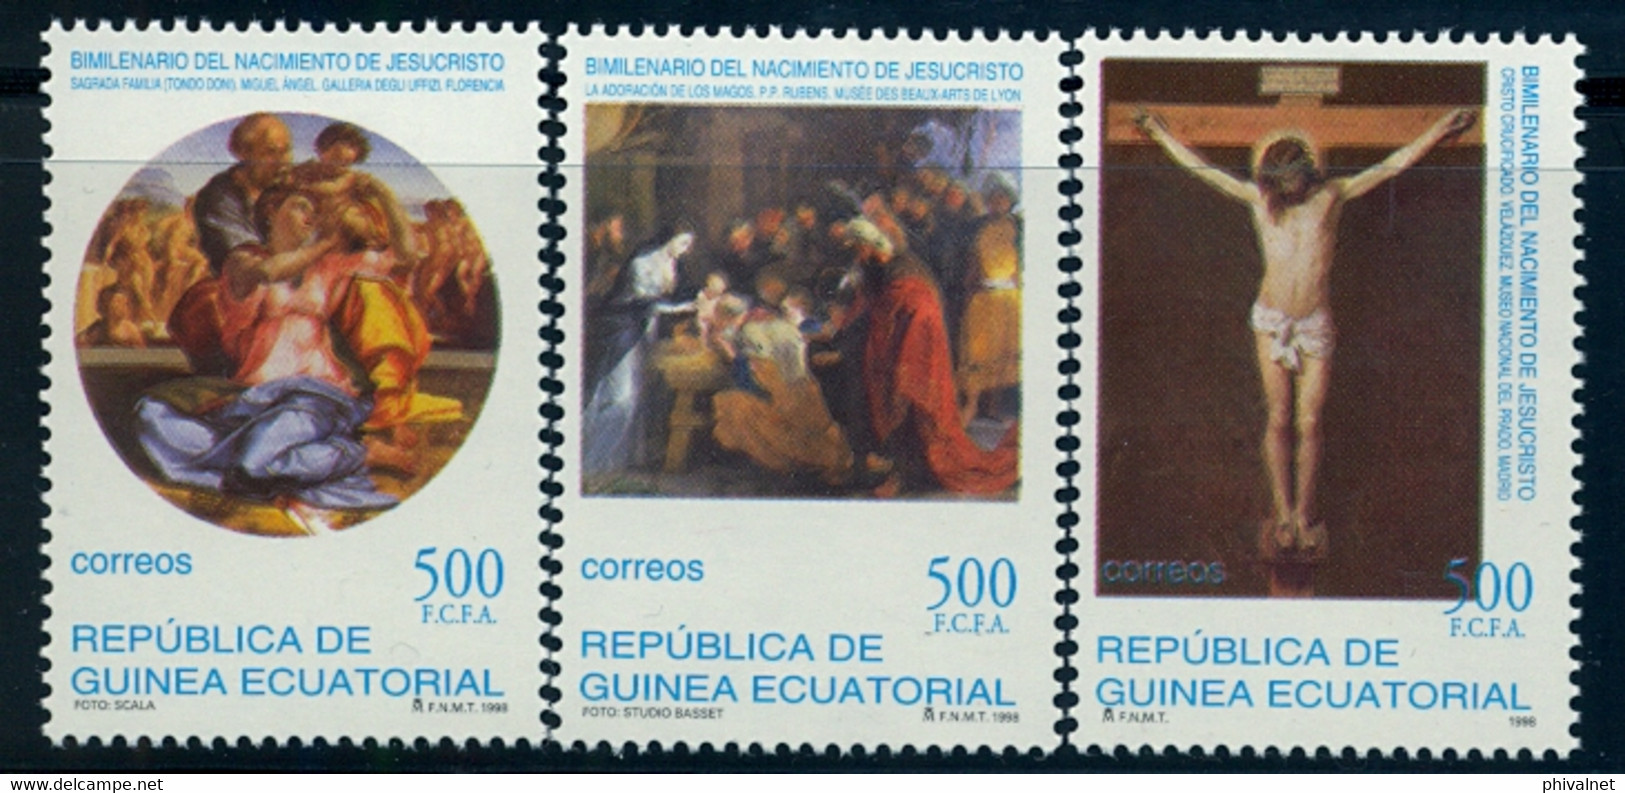 GUINEA ECUATORIAL , ED. 252 / 254 **, BIMILENARIO DEL NACIMIENTO DE JESUCRISTO , RELIGIÓN , ARTE , PINTURA - Equatoriaal Guinea